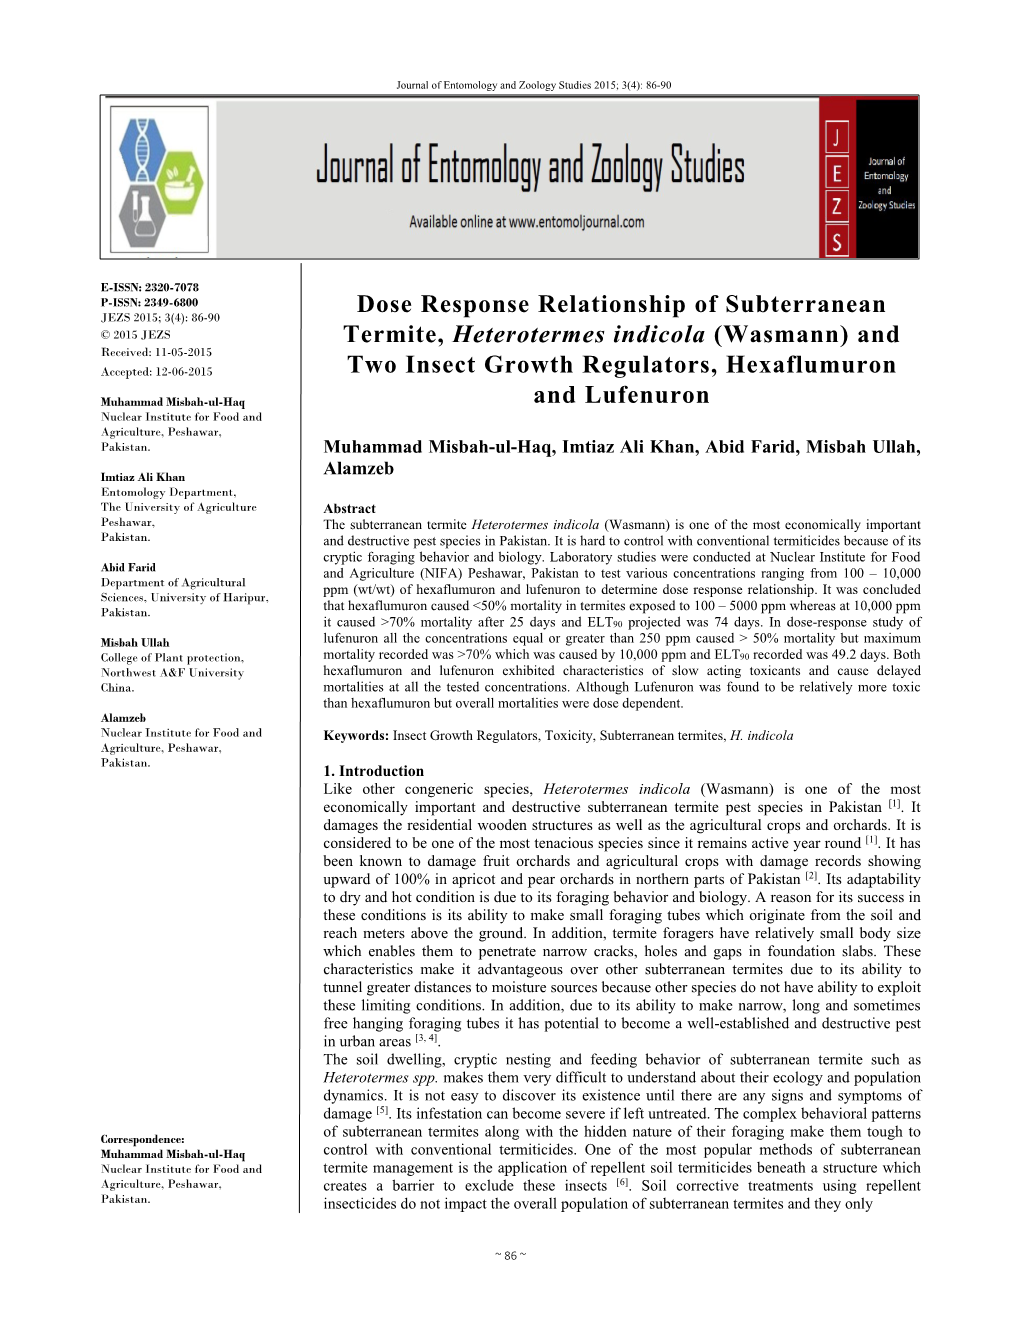 Dose Response Relationship of Subterranean Termite